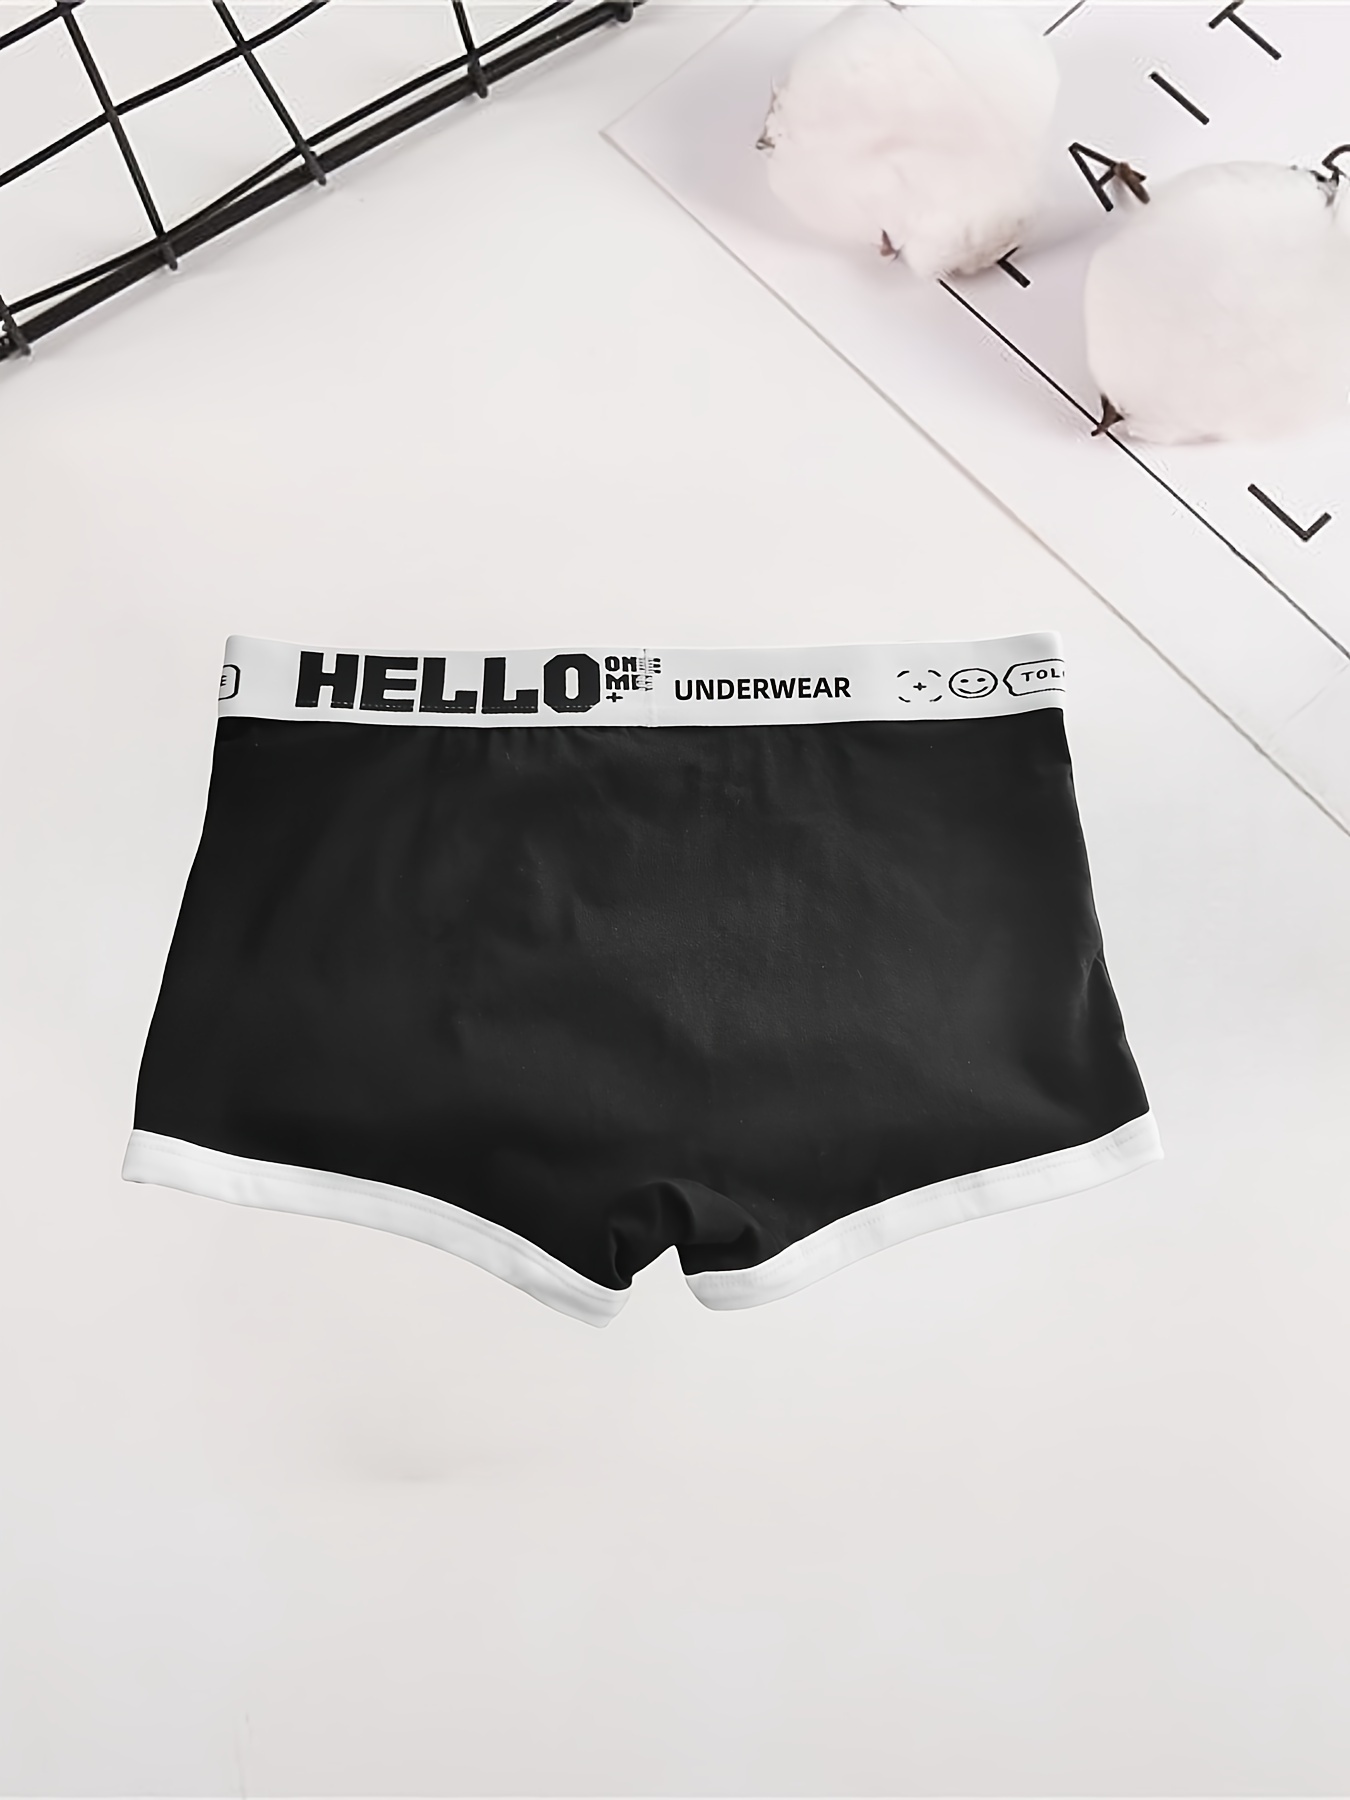 Sanrio Boxers Custom Photo Boxers Men's Underwear Plain Black Boxers